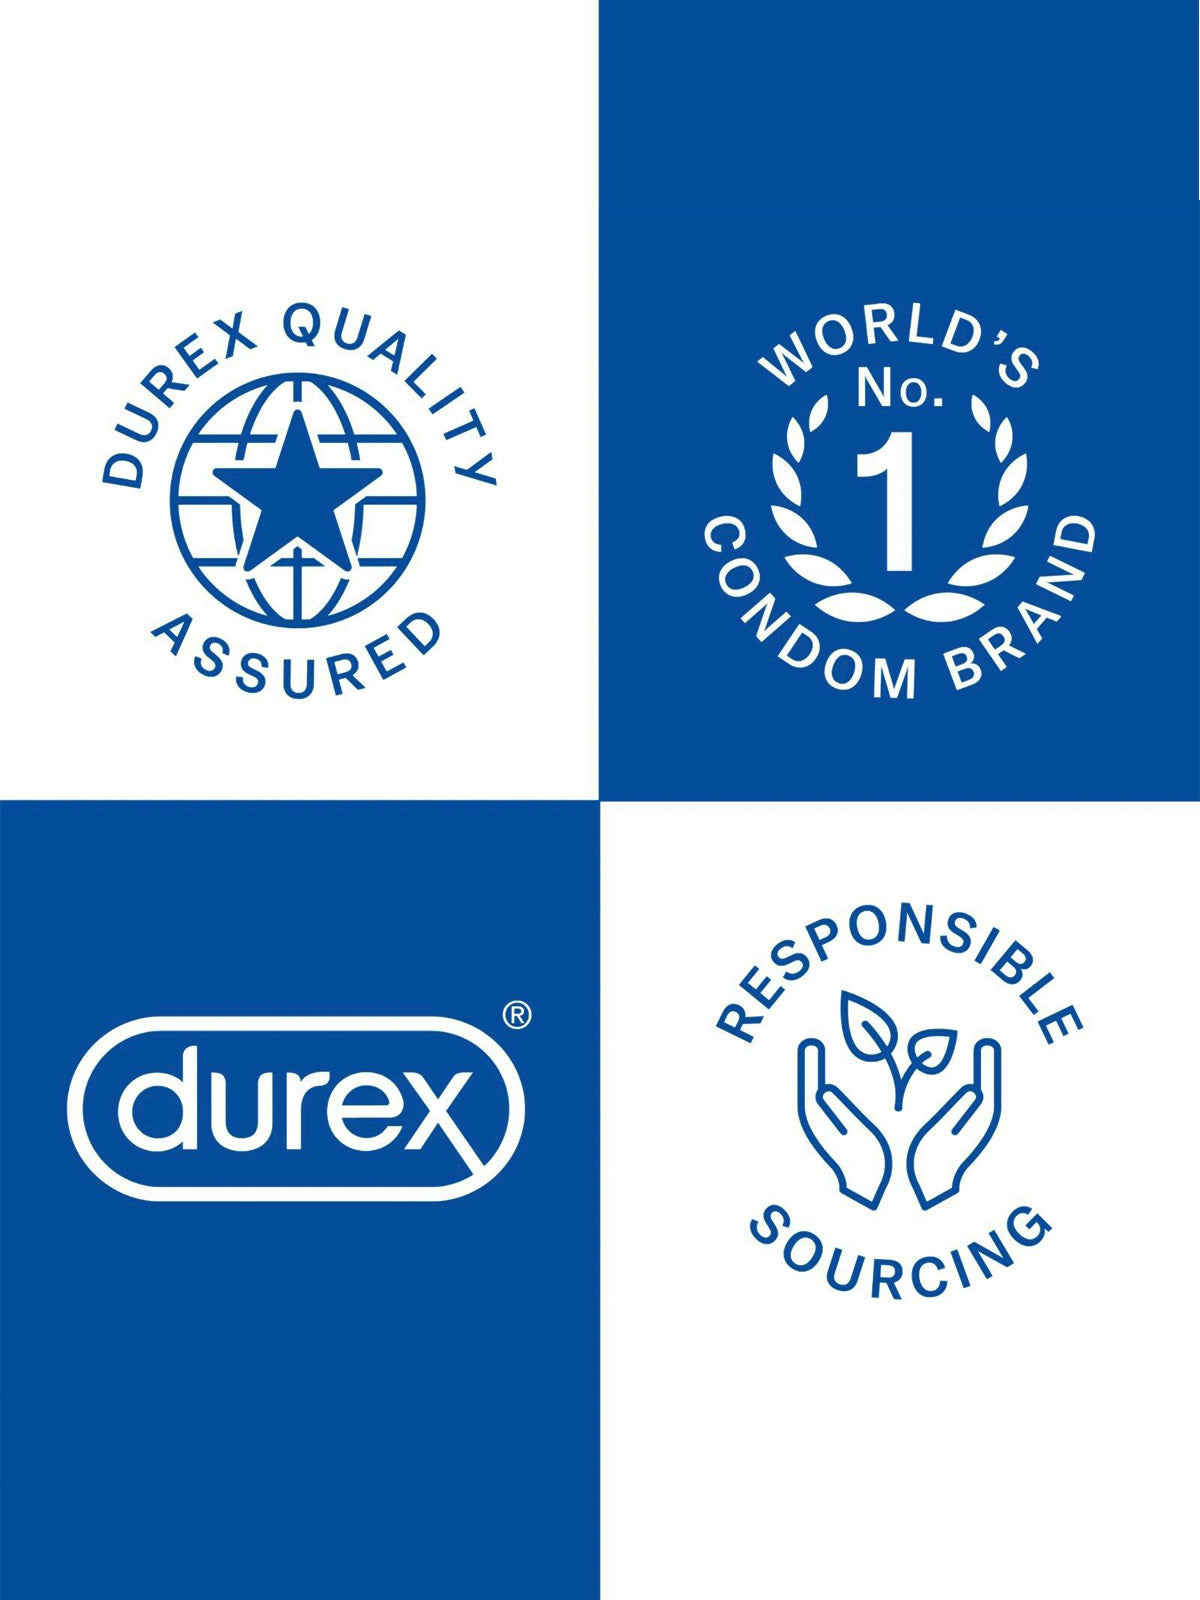 Durex (UK) Mutual Climax Condoms – 12 Pack